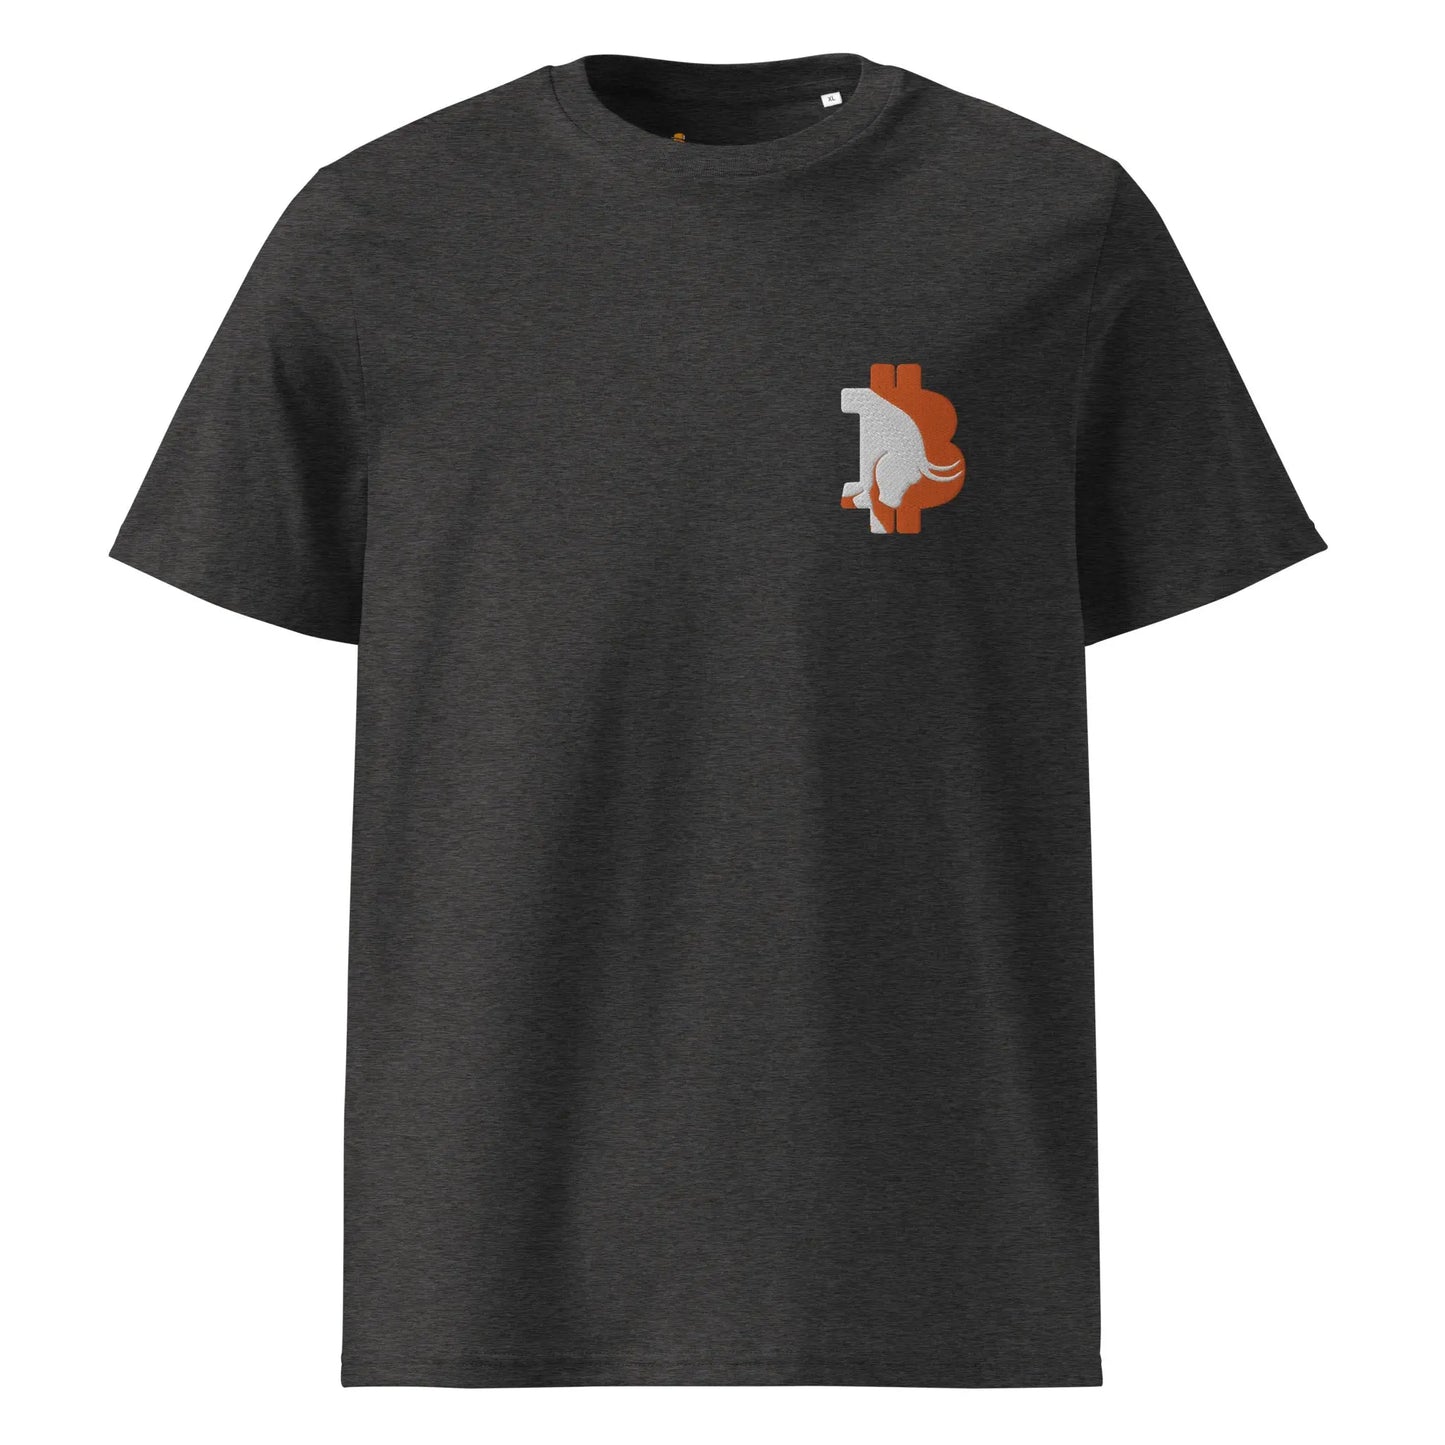 Bitcoin Bull Run - Embroidered - Premium Unisex Organic Cotton Bitcoin T-shirt Store of Value